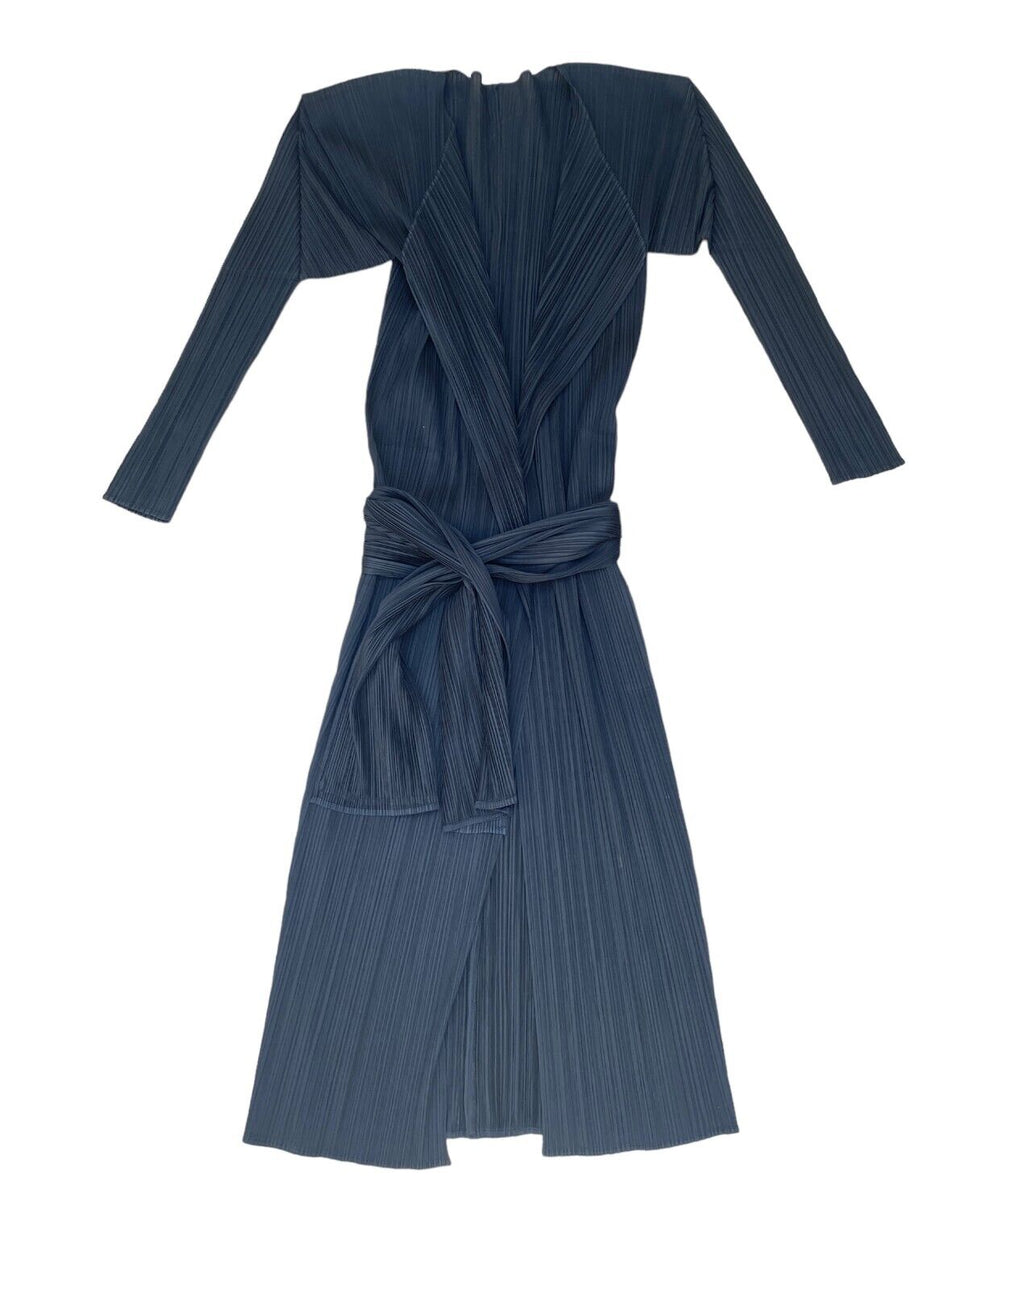 Black Long Pleated Coat / Dress